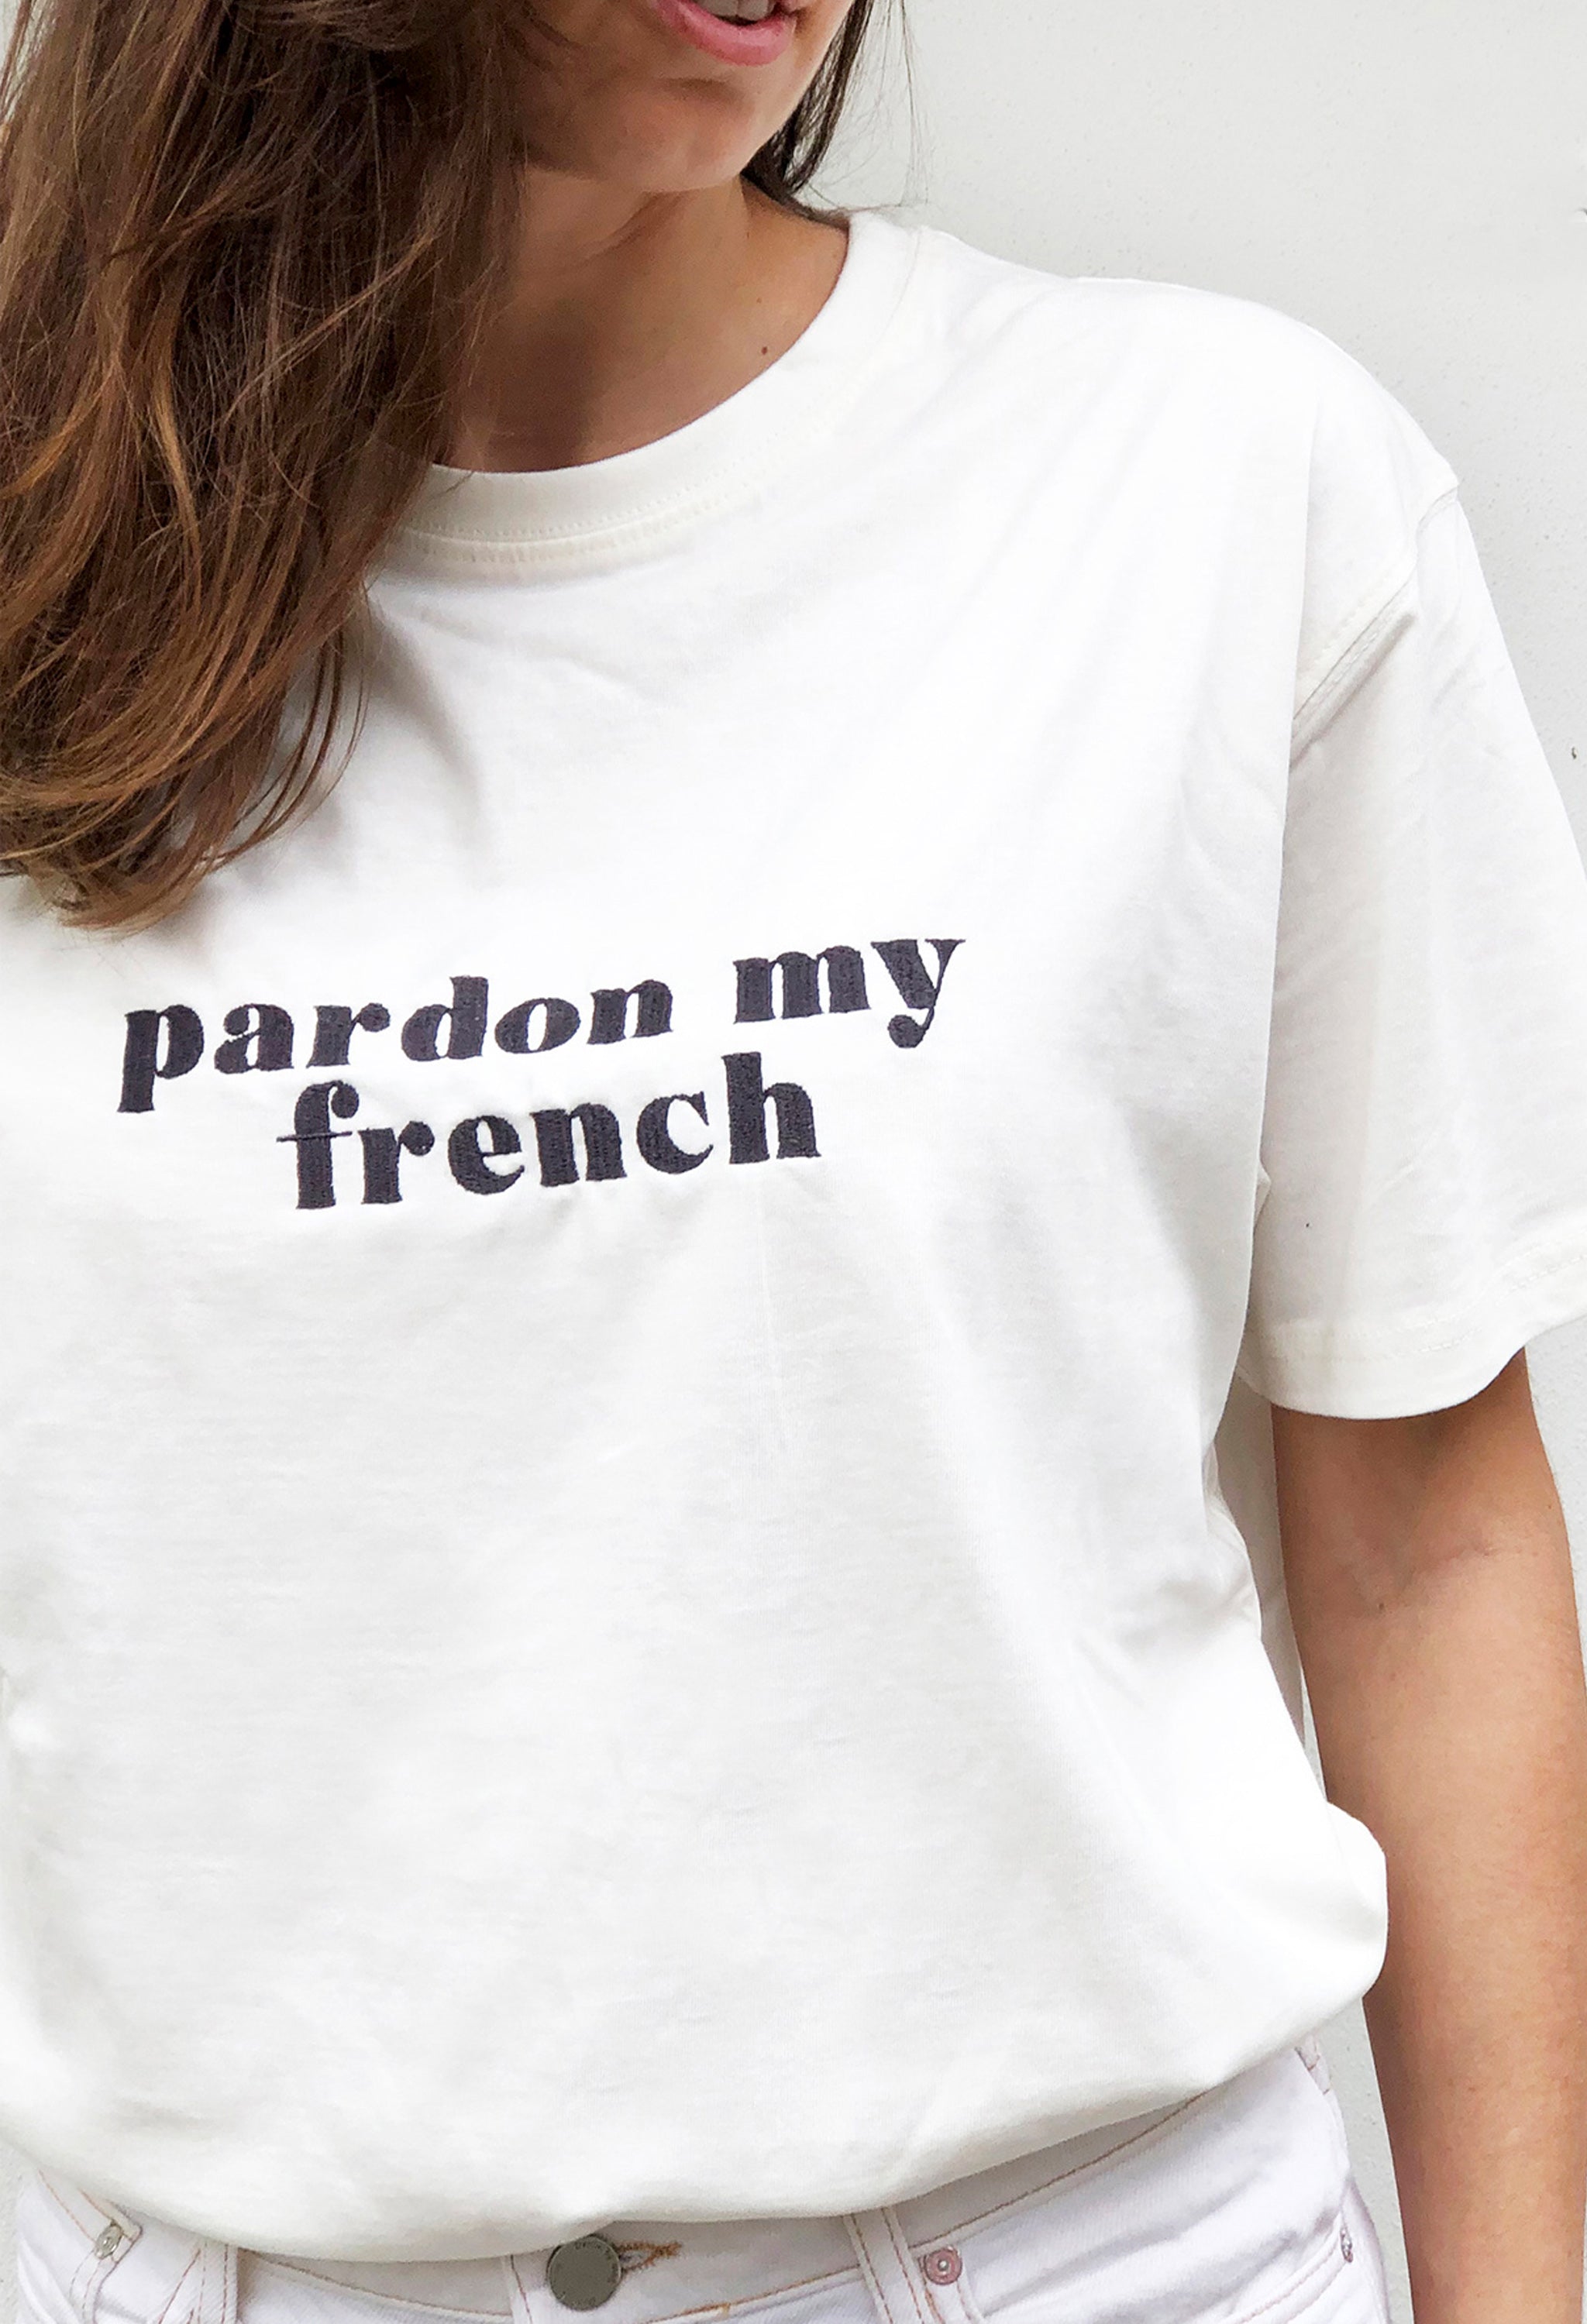 Pardon my French T-shirt